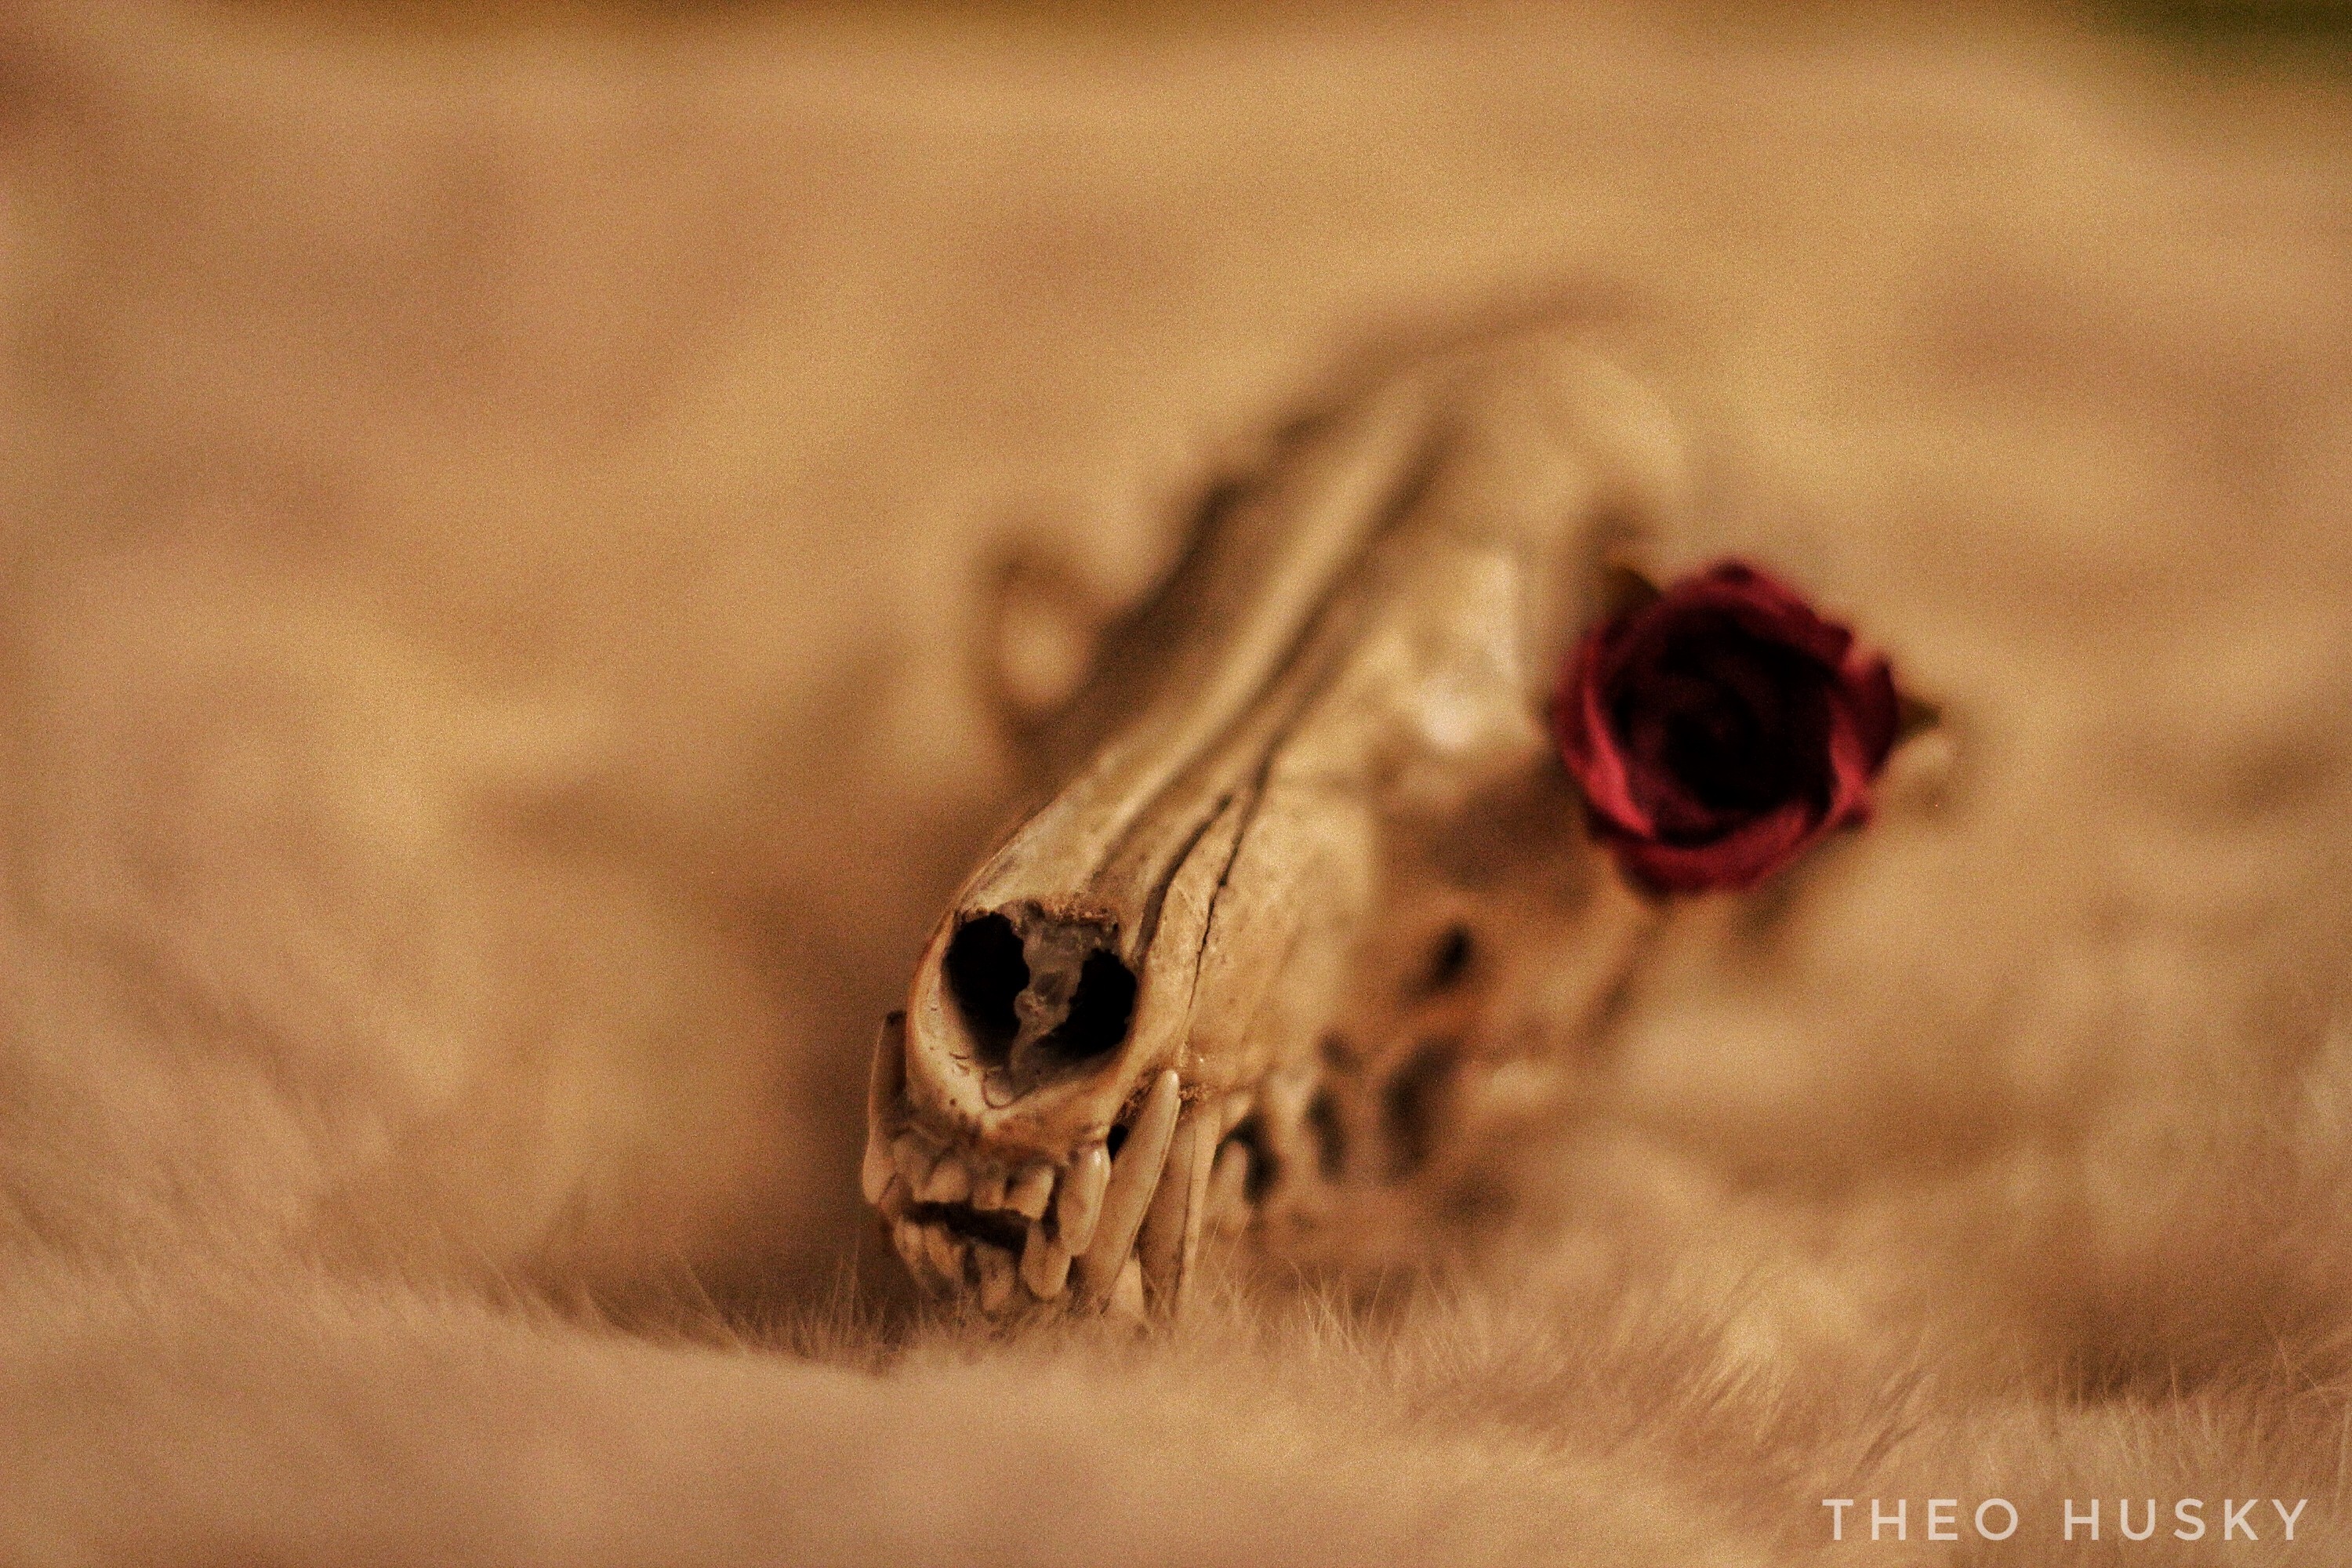 Dead Rose 2